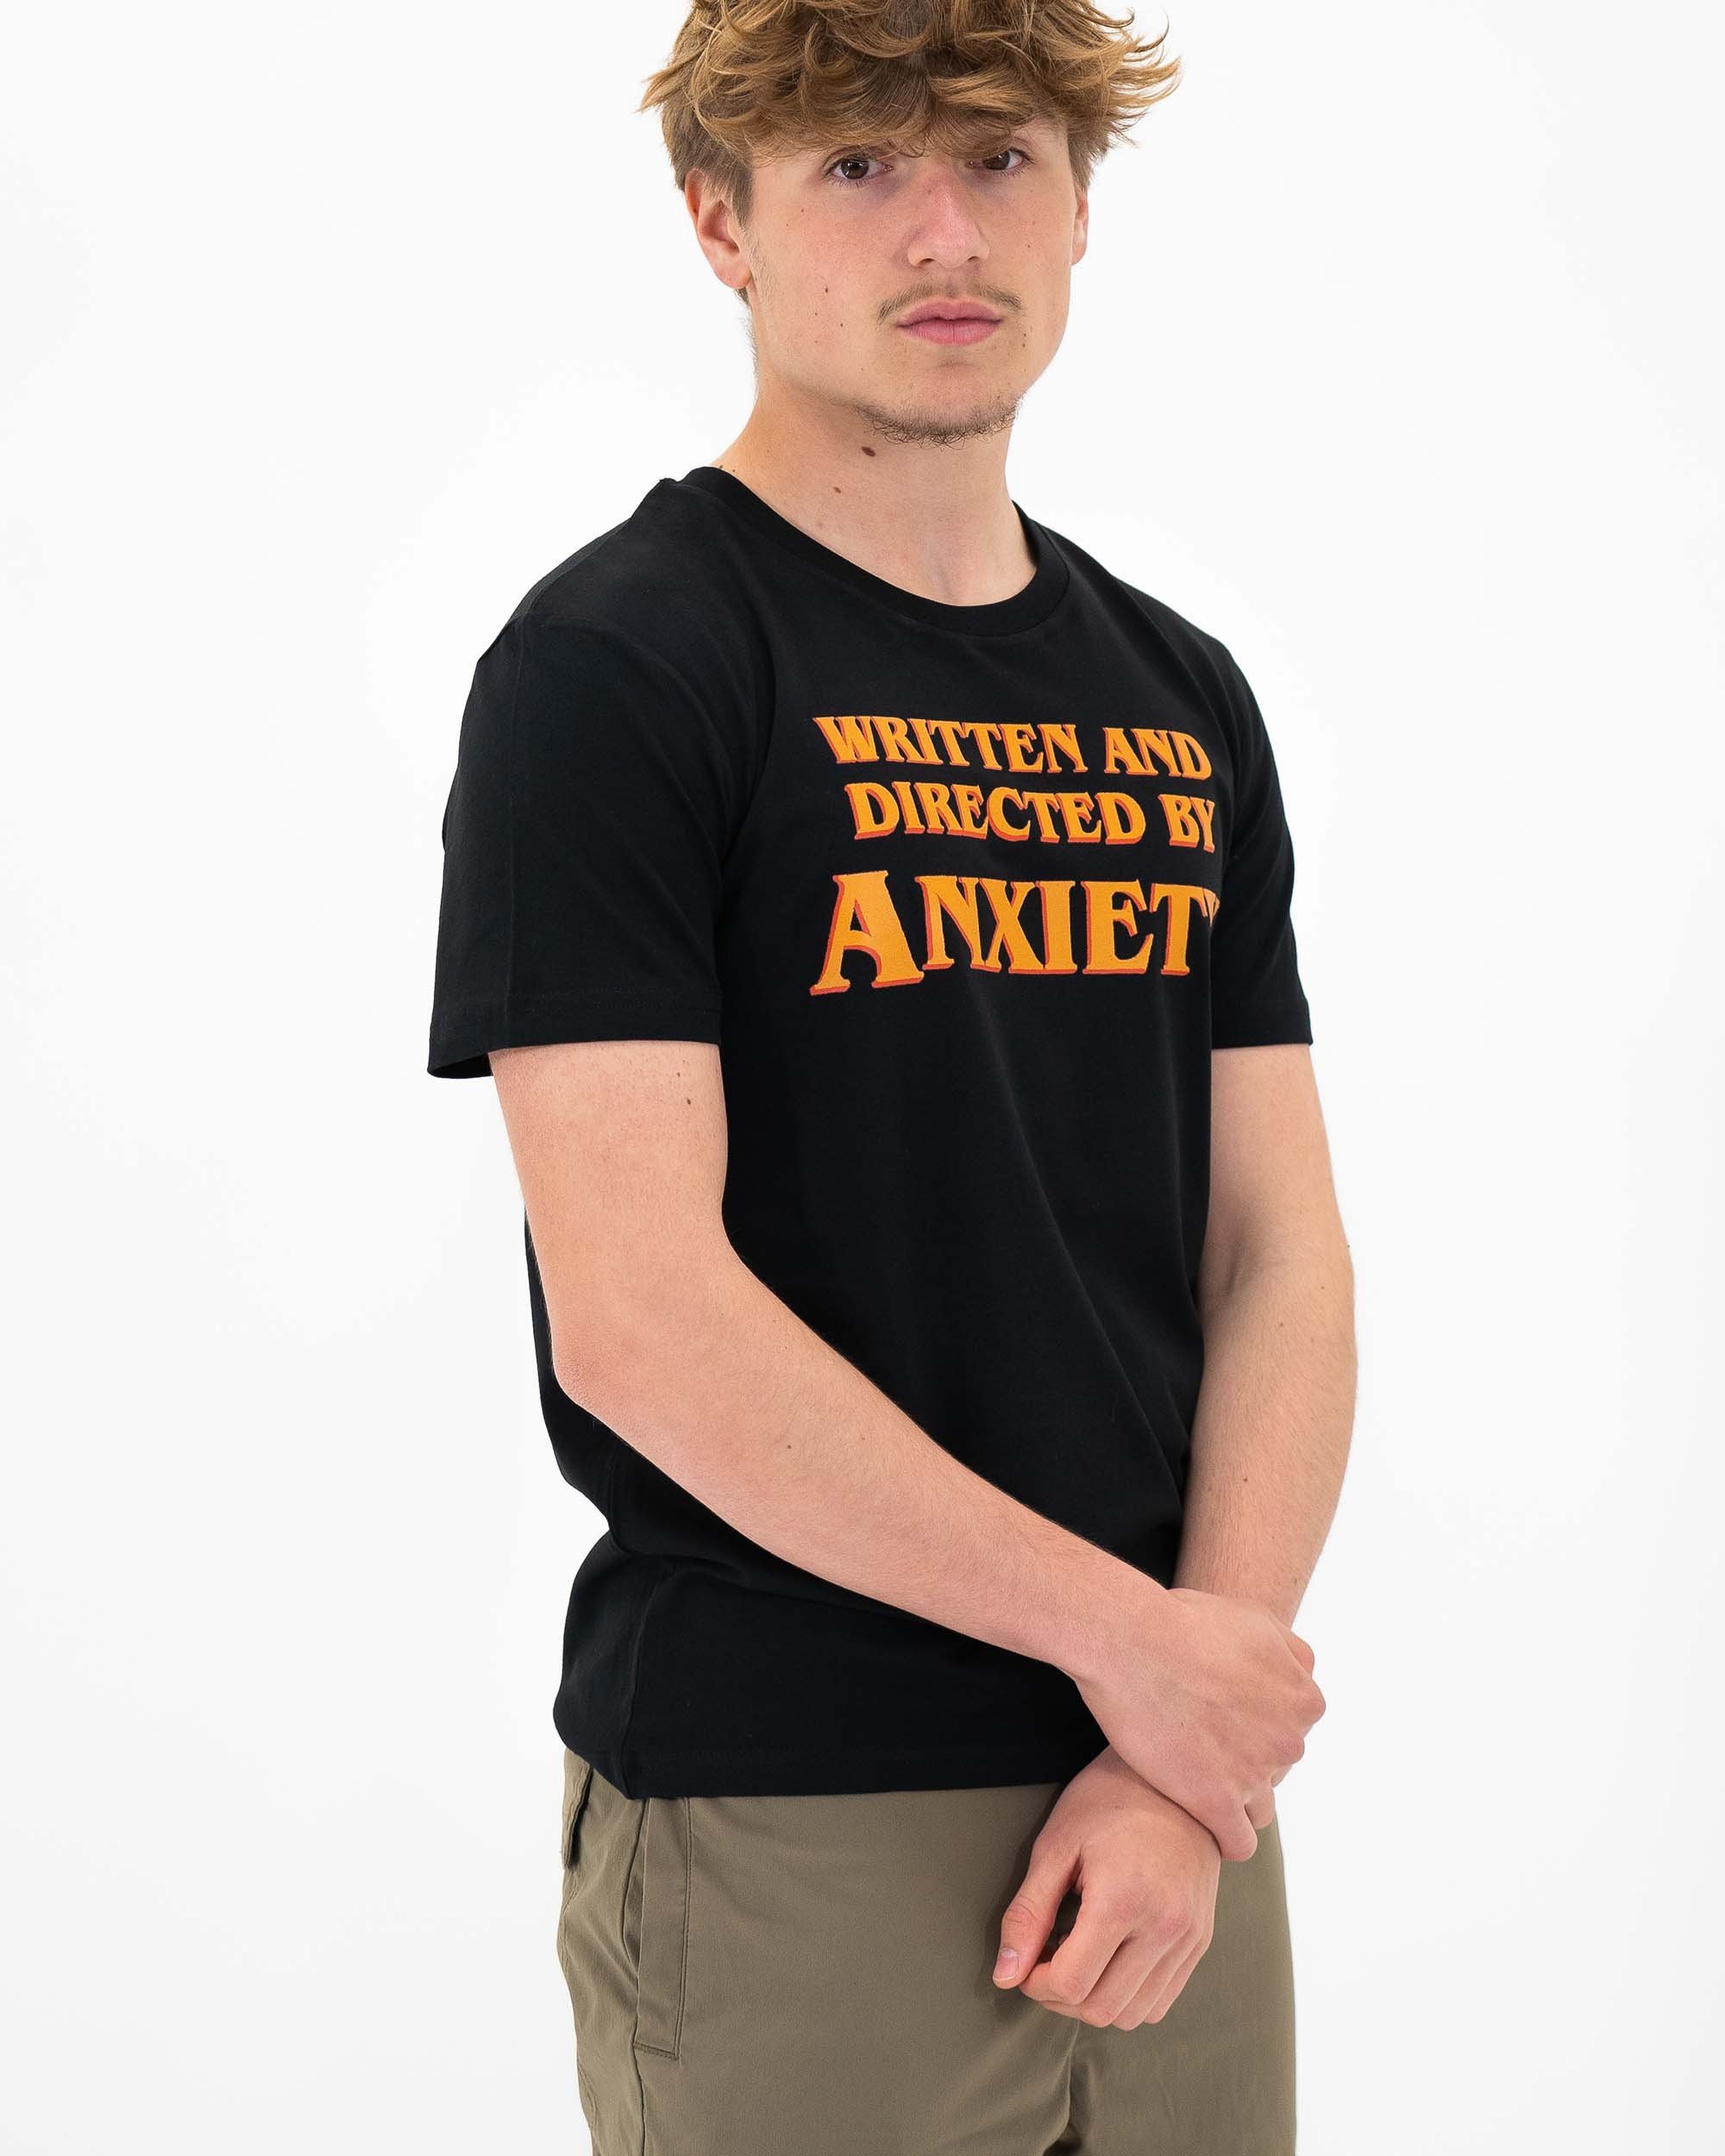 T-shirt Anxiety Grafitee